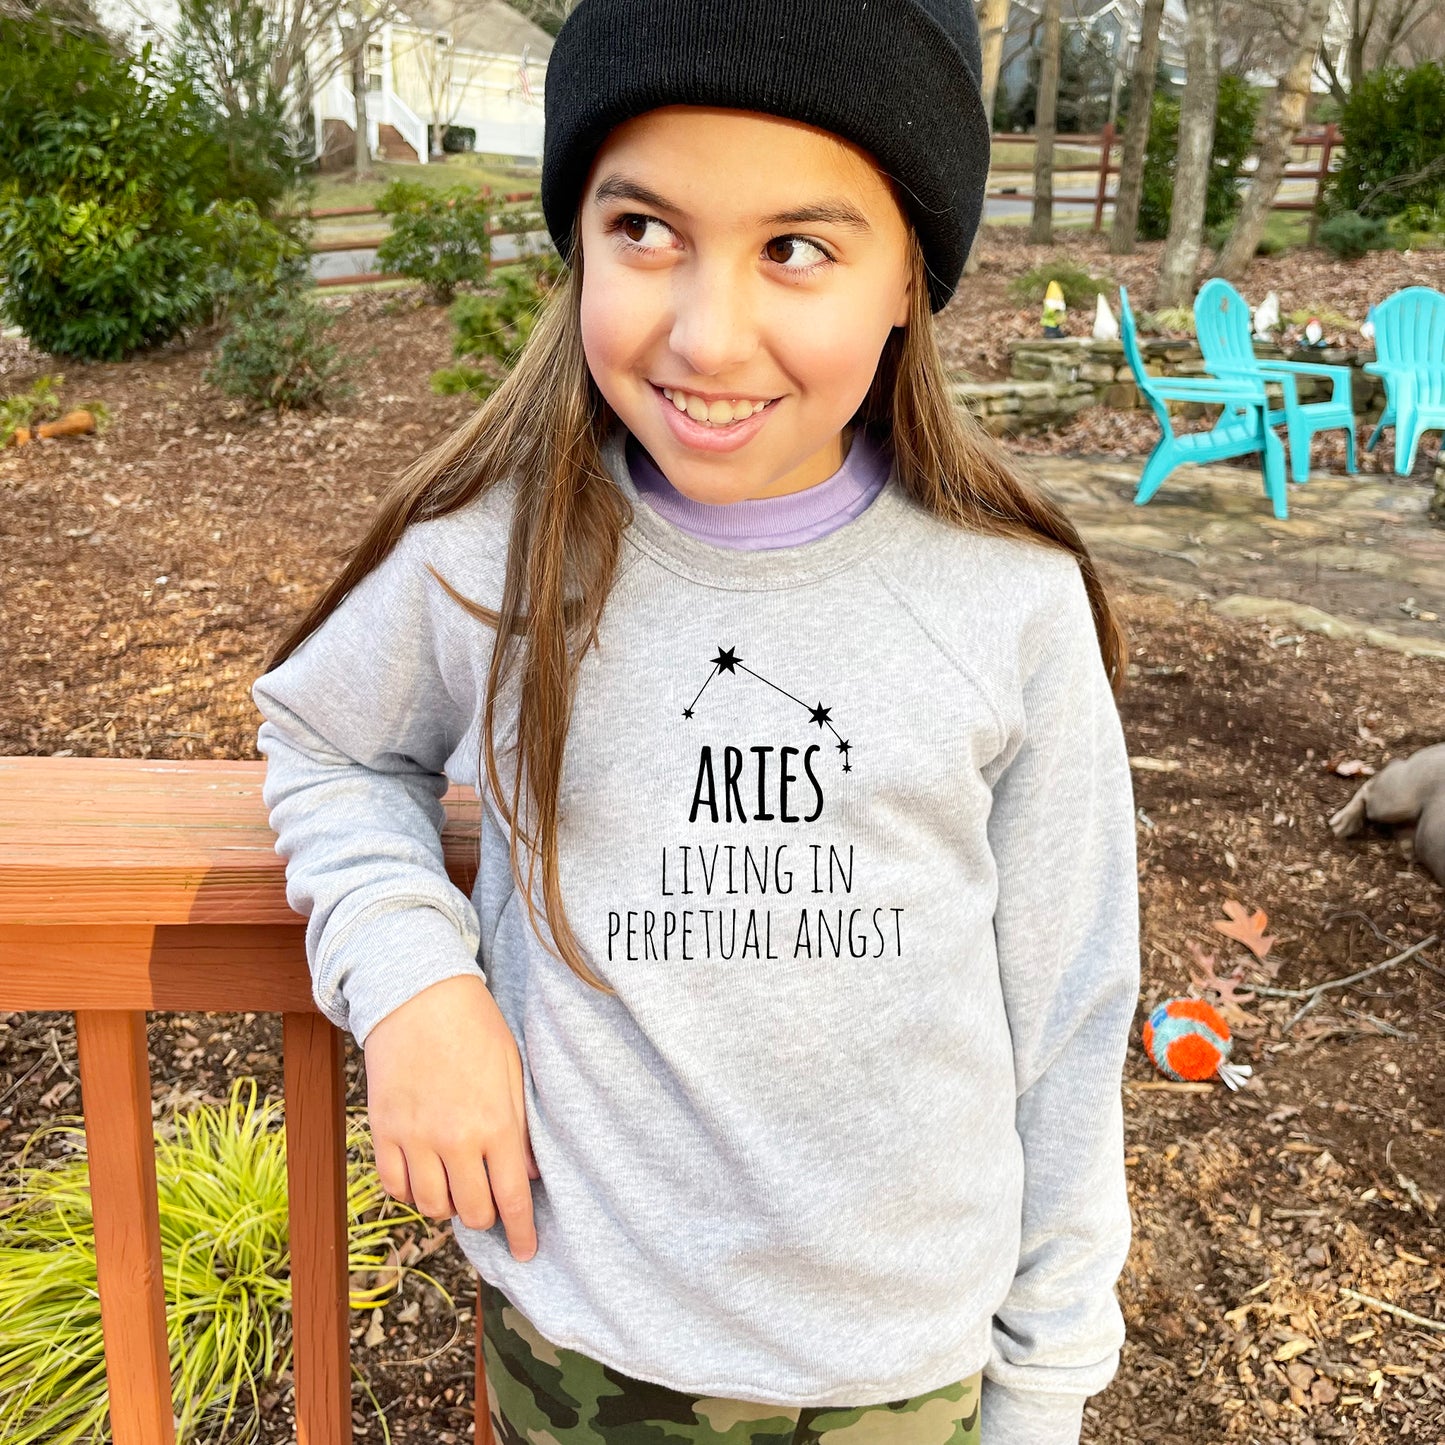 Aries - Kid's Sweatshirt - Heather Gray or Mauve